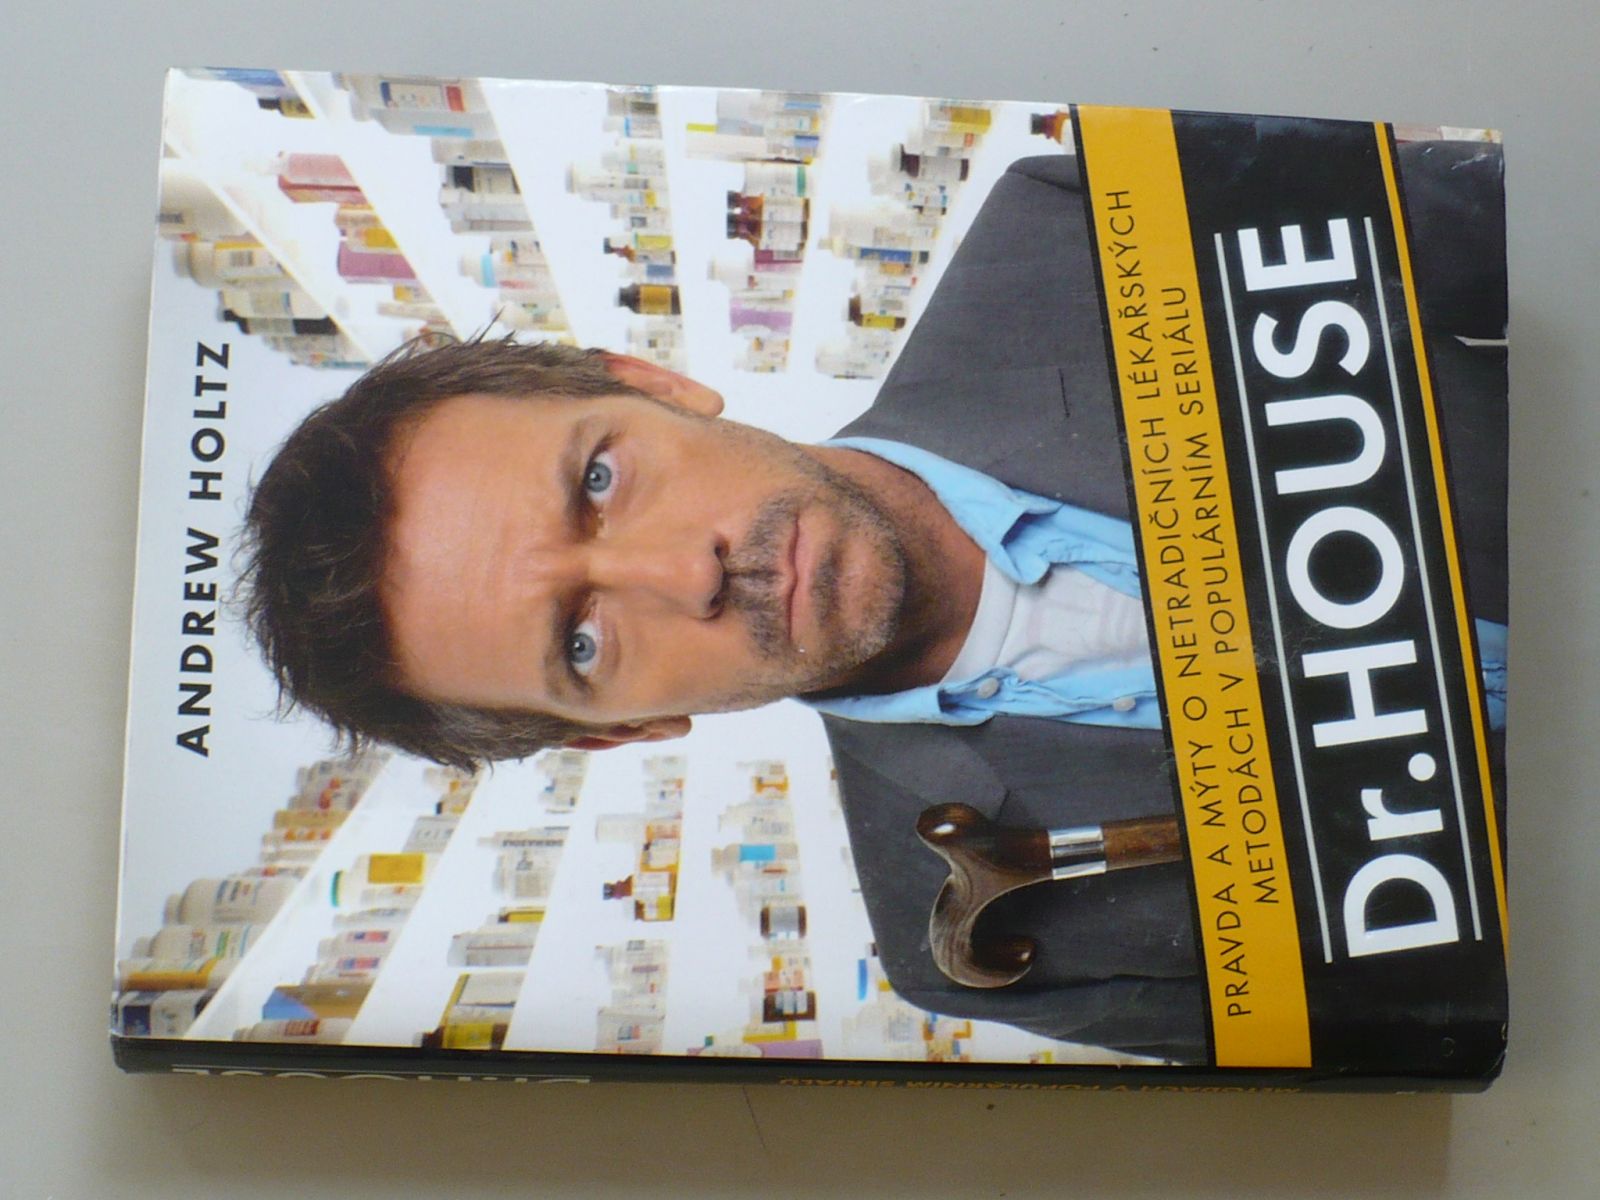 Holtz - Dr. House (2007)